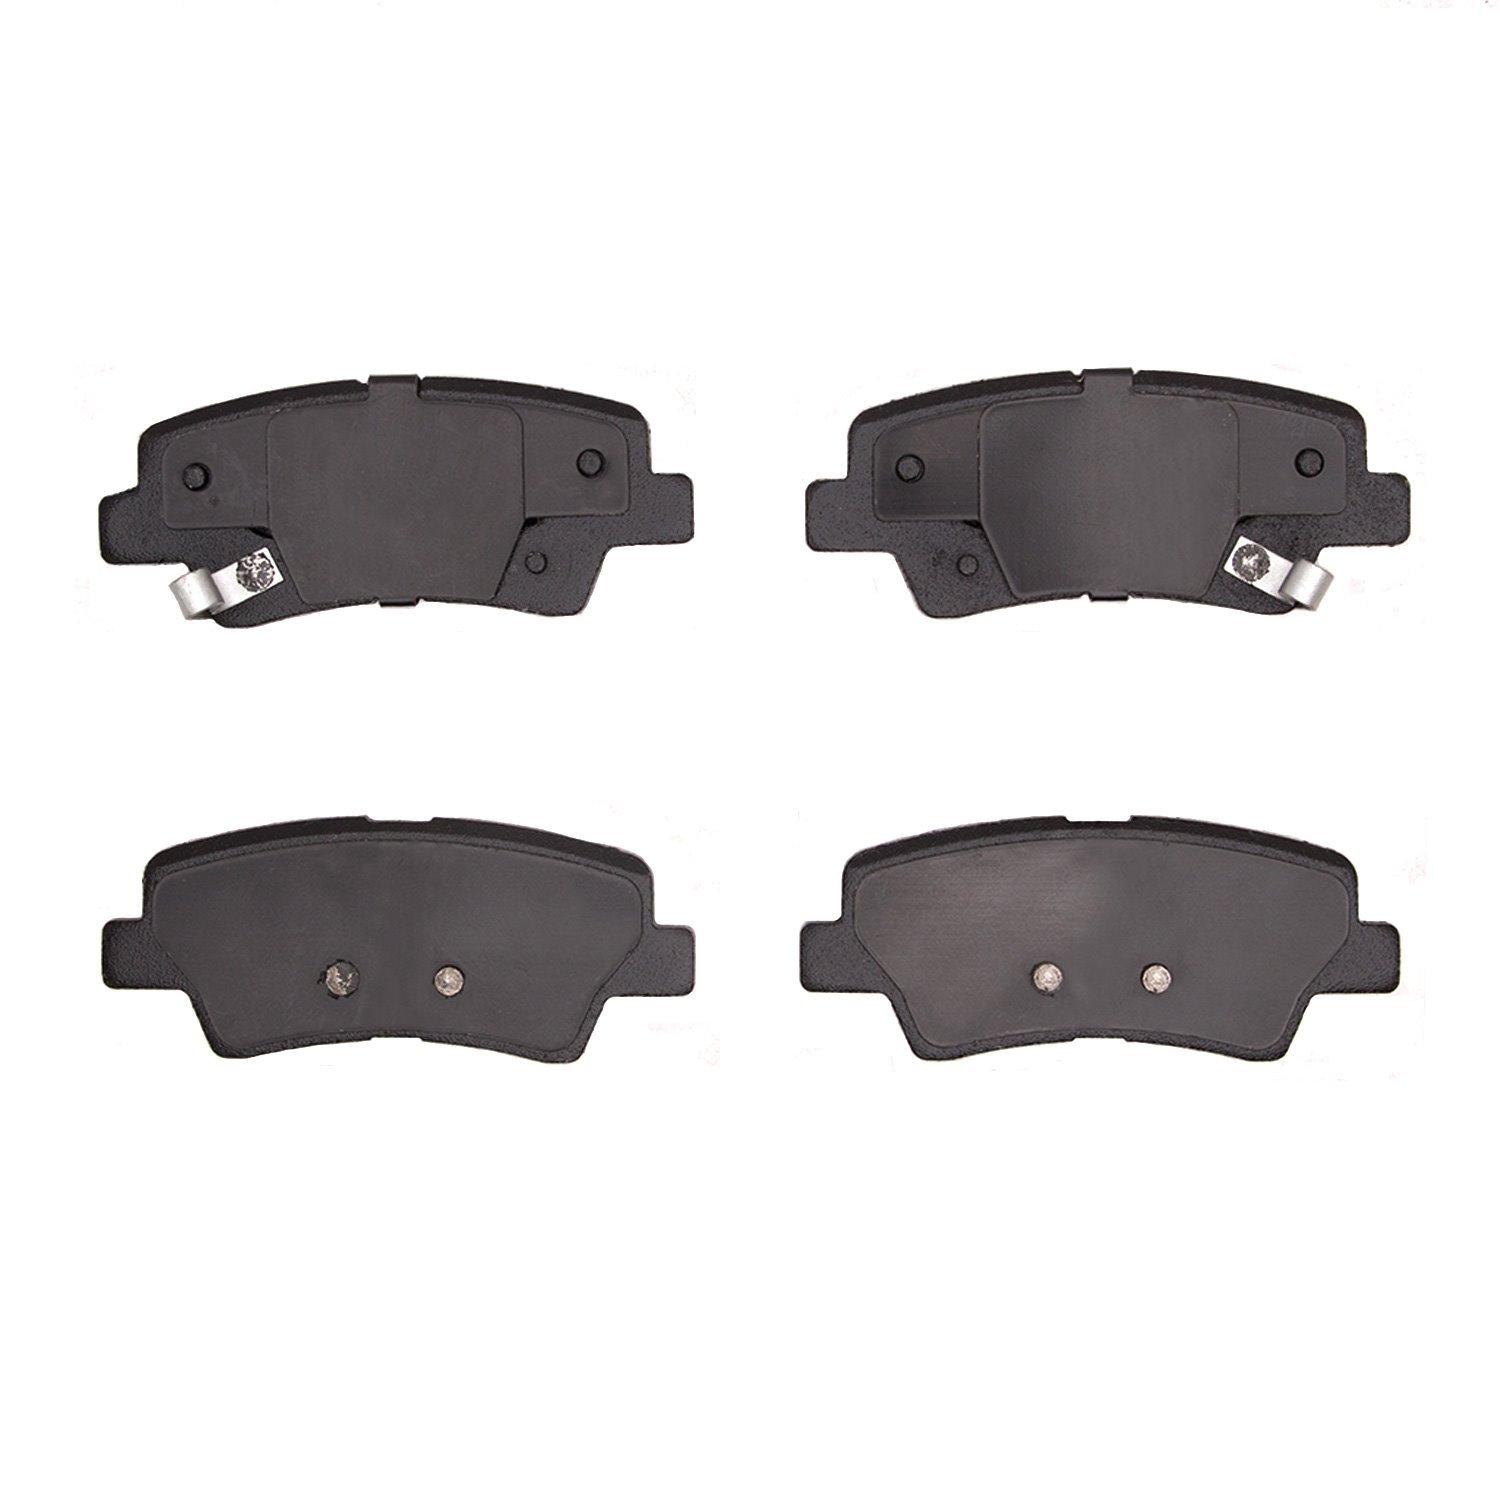 1310-1848-00 3000-Series Ceramic Brake Pads, Fits Select Kia/Hyundai/Genesis, Position: Rear